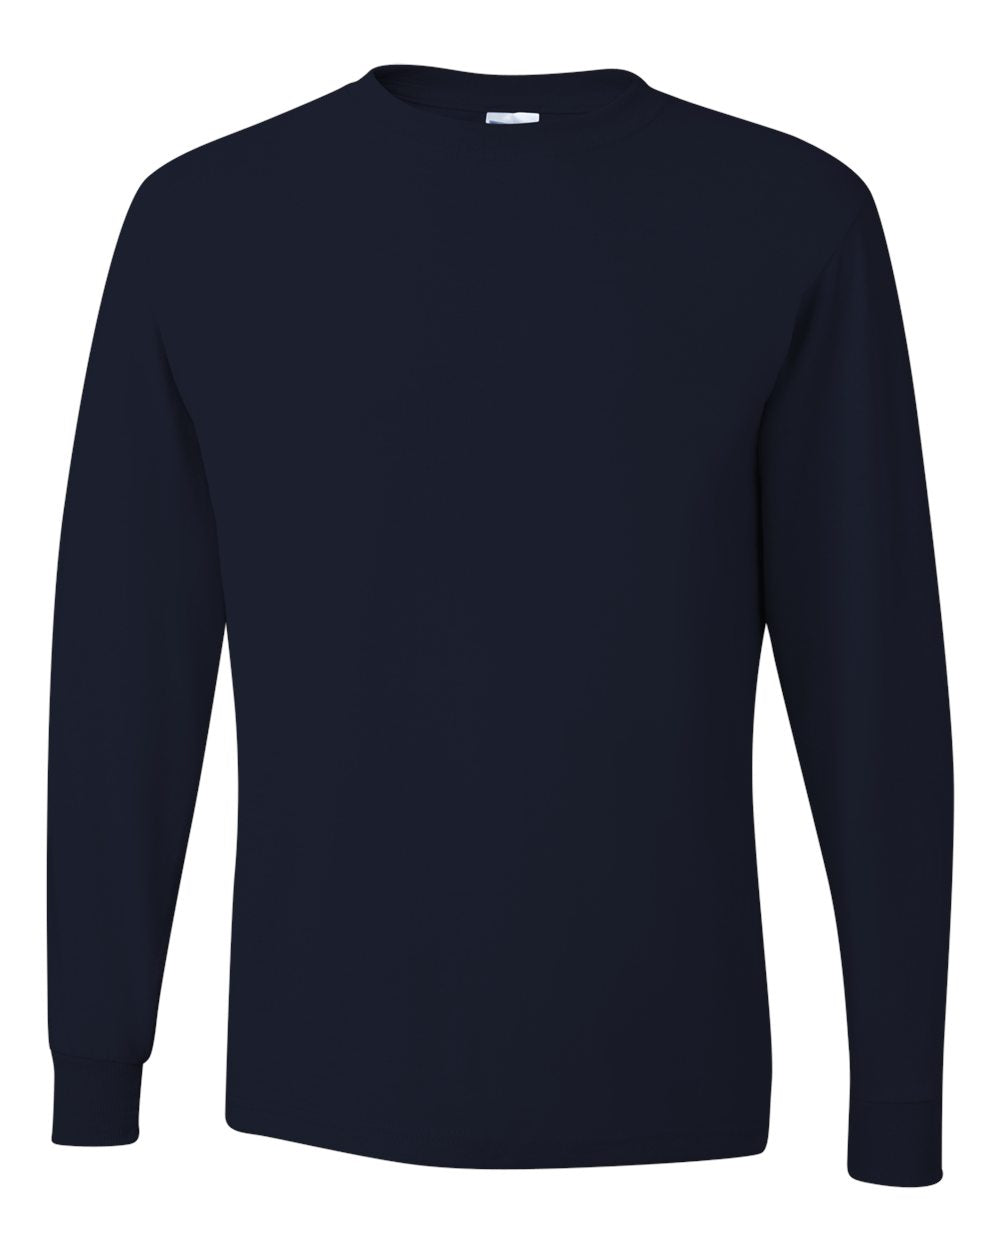 Navy Long Sleeve T-Shirt